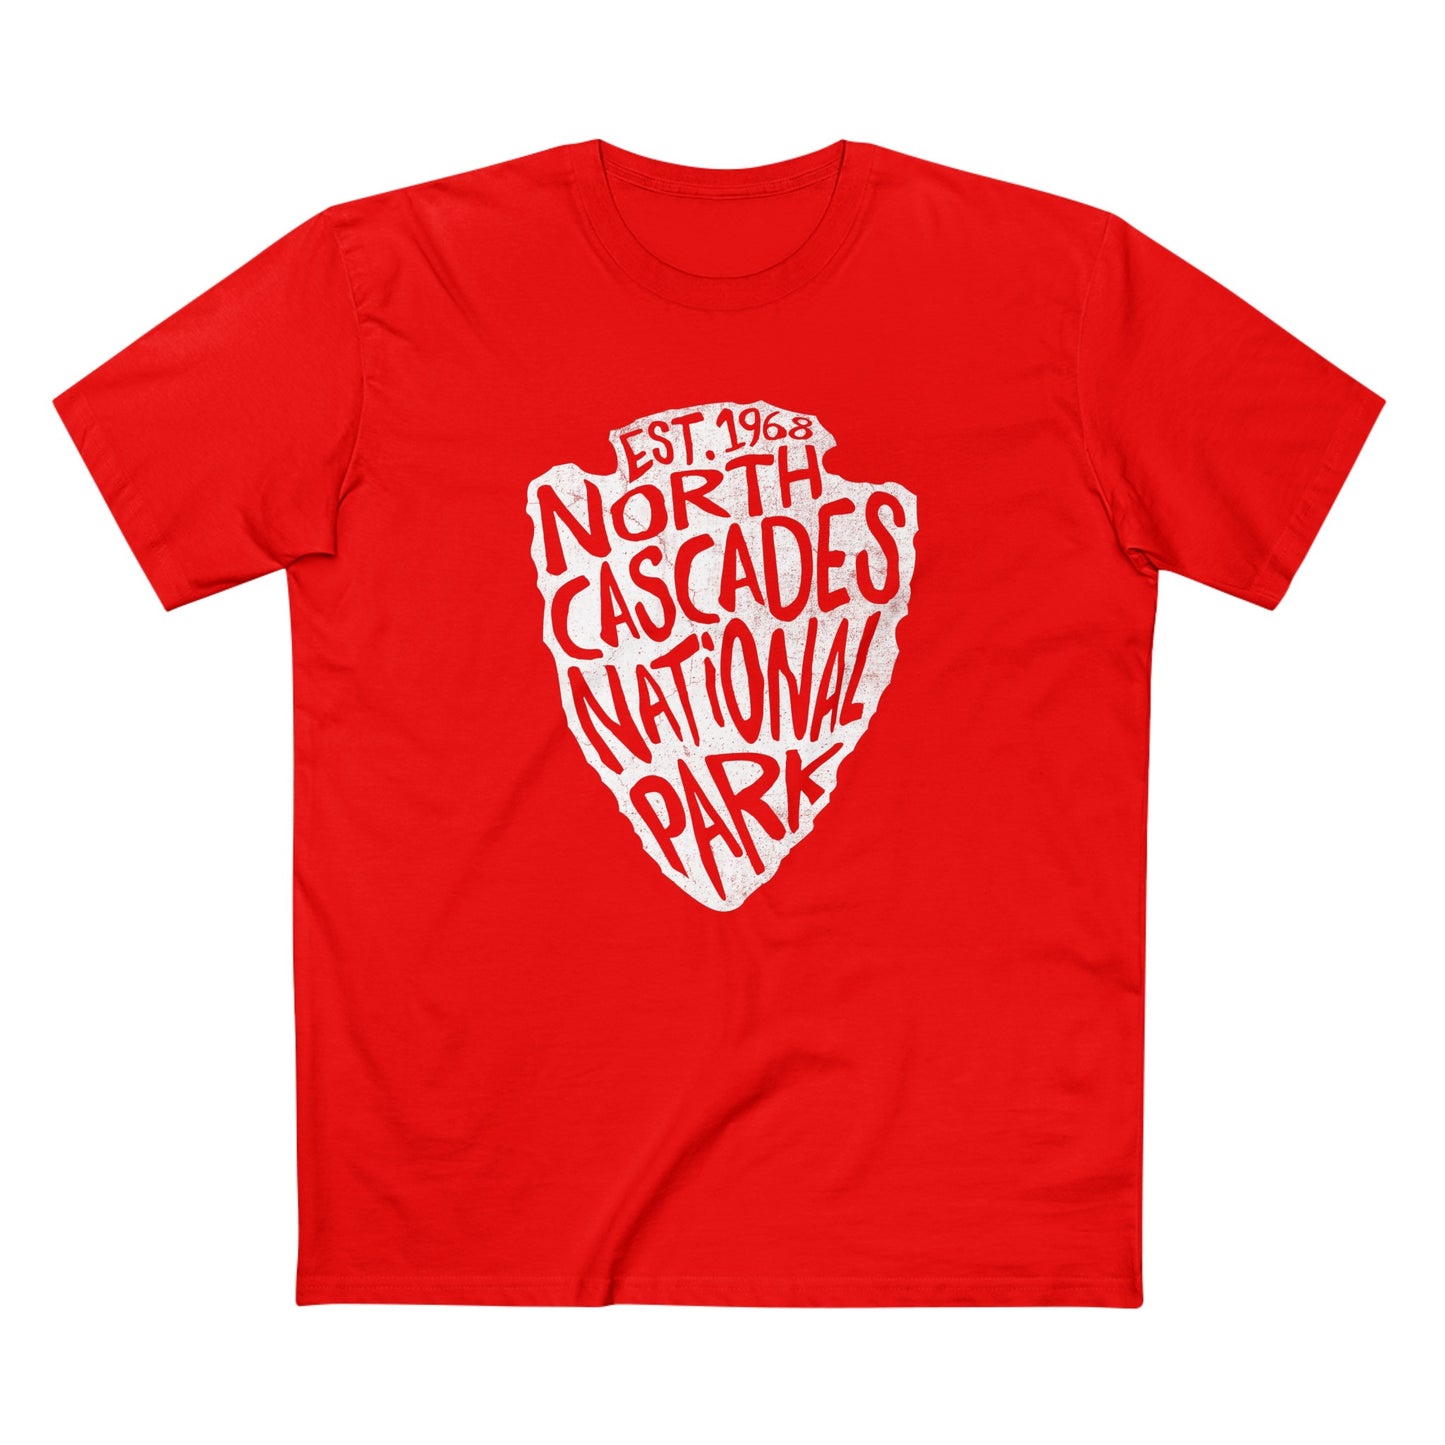 North Cascades National Park T-Shirt - Arrow head Design